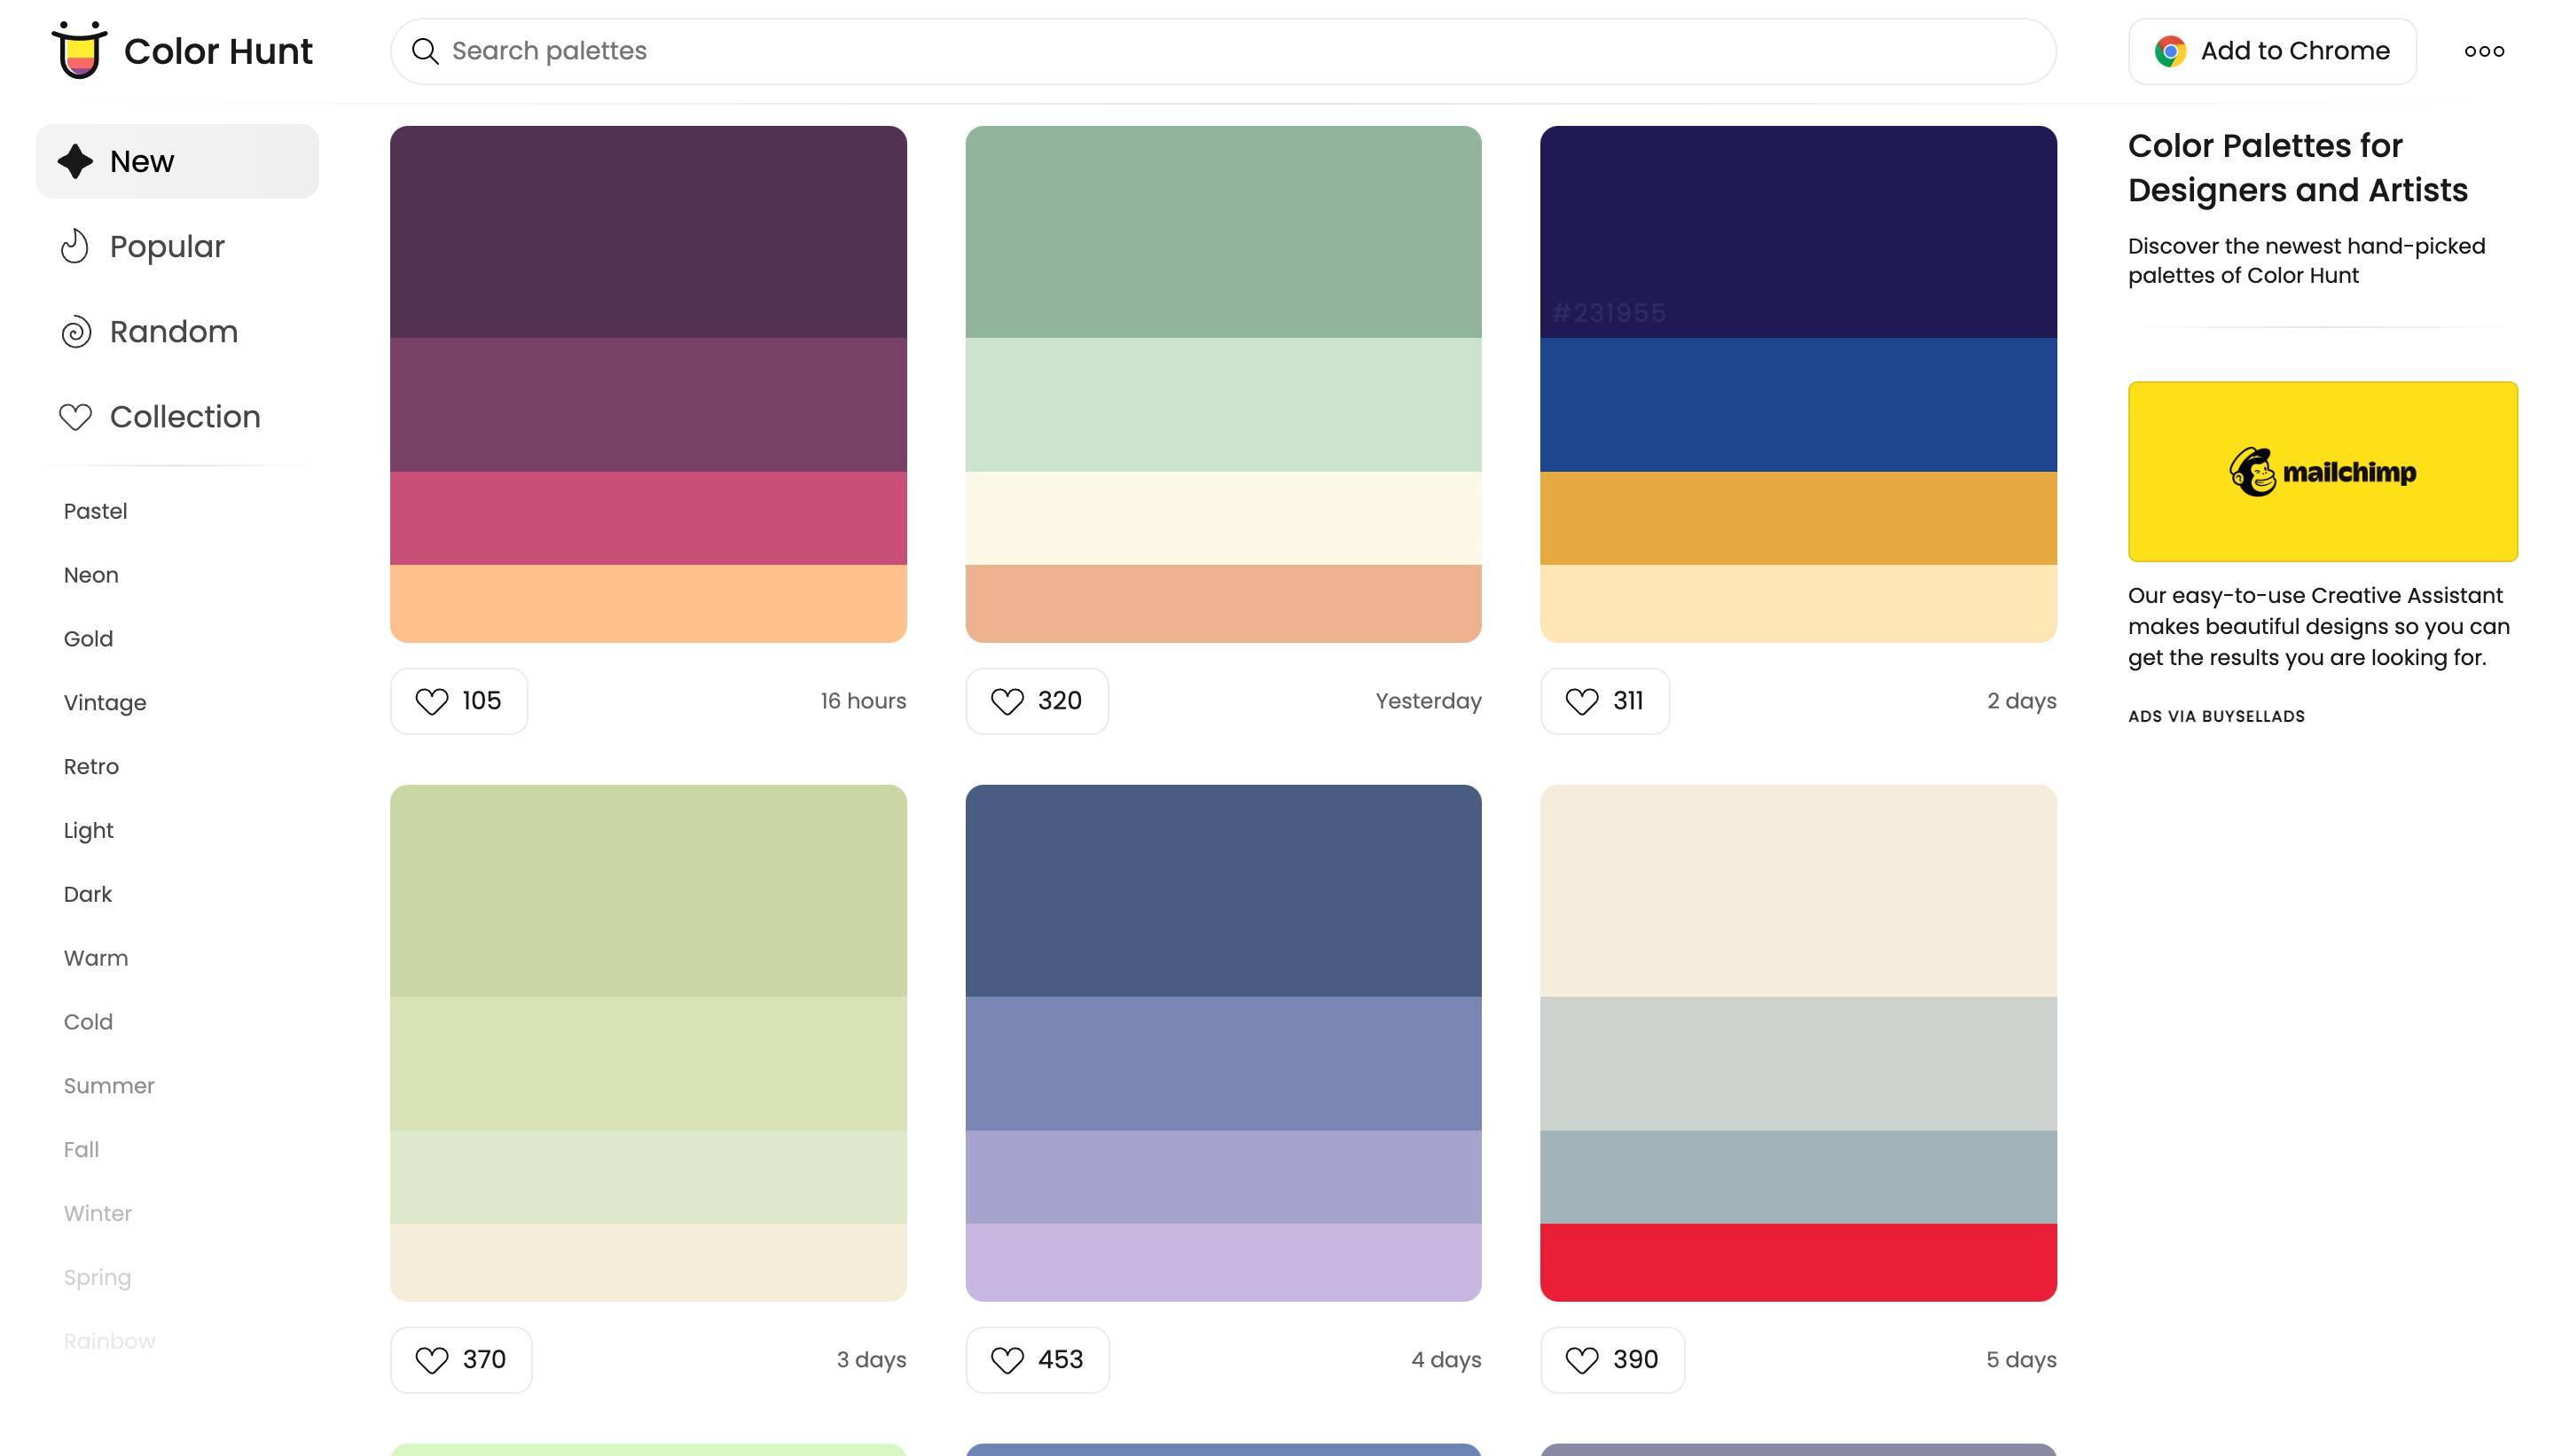 Color Palettes for Designers and Artists - Color Hunt (1).png